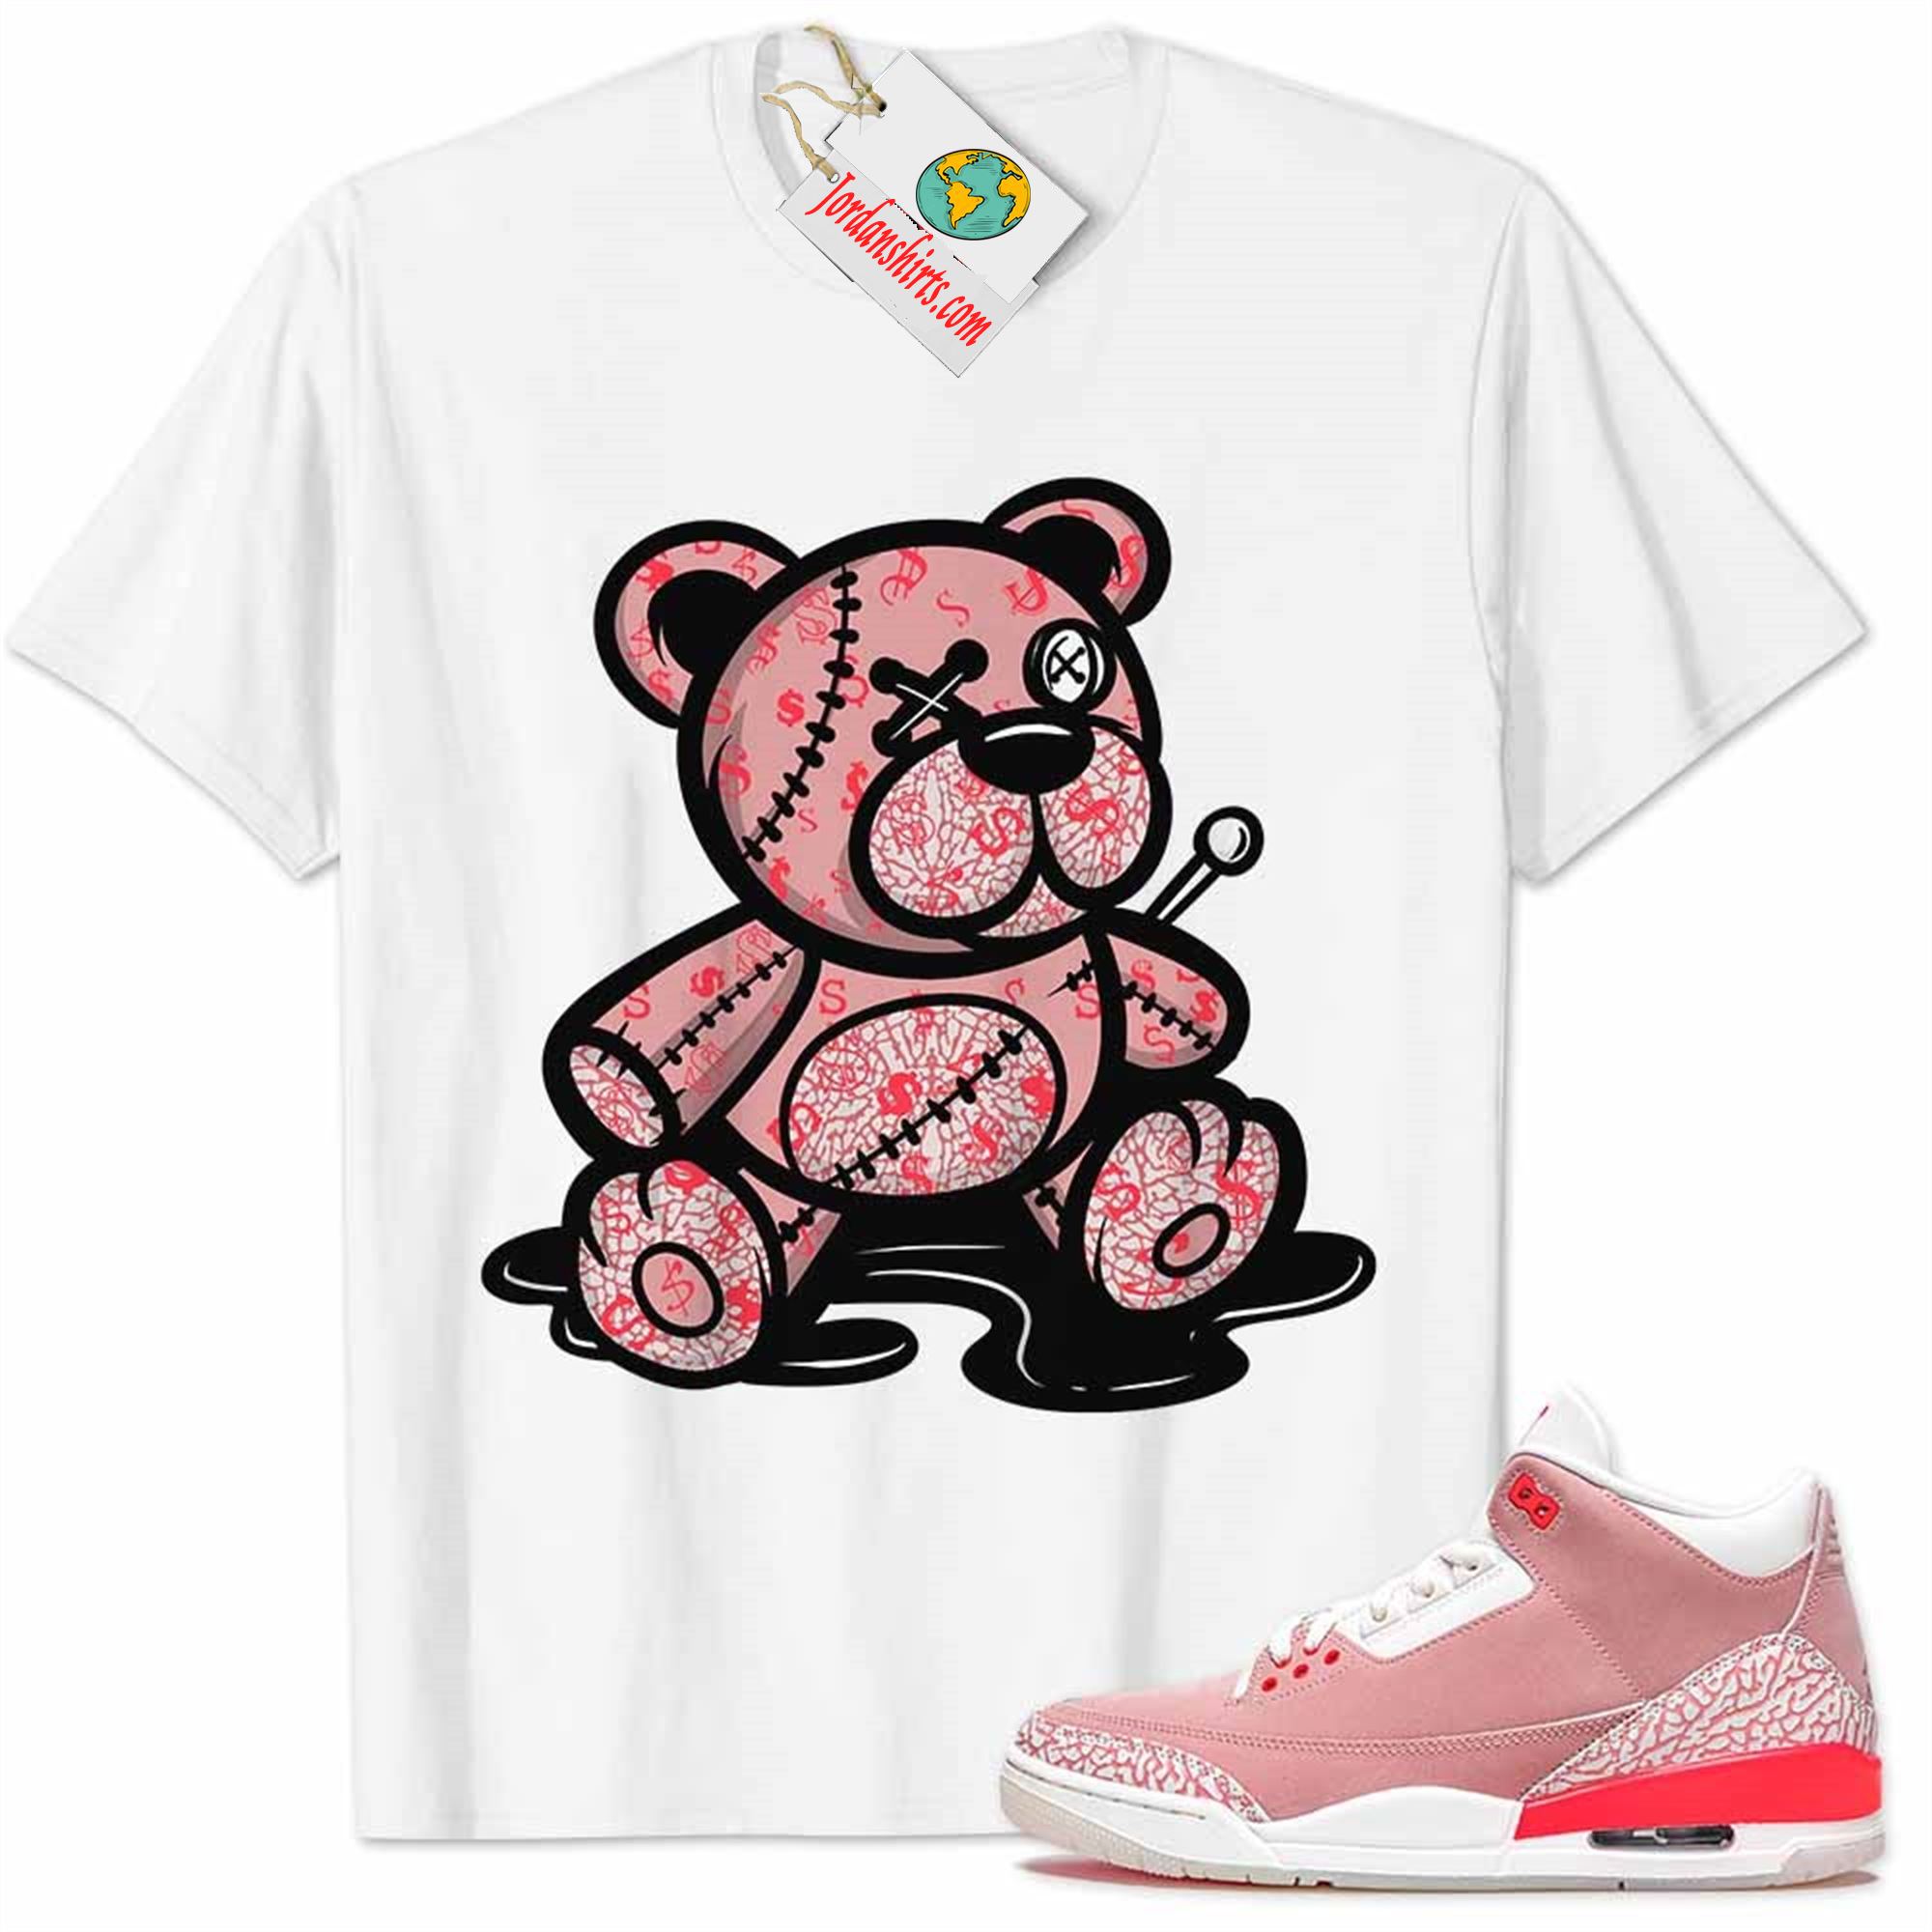 Jordan 3 Shirt, Jordan 3 Rust Pink Shirt Teddy Bear All Money In White Full Size Up To 5xl